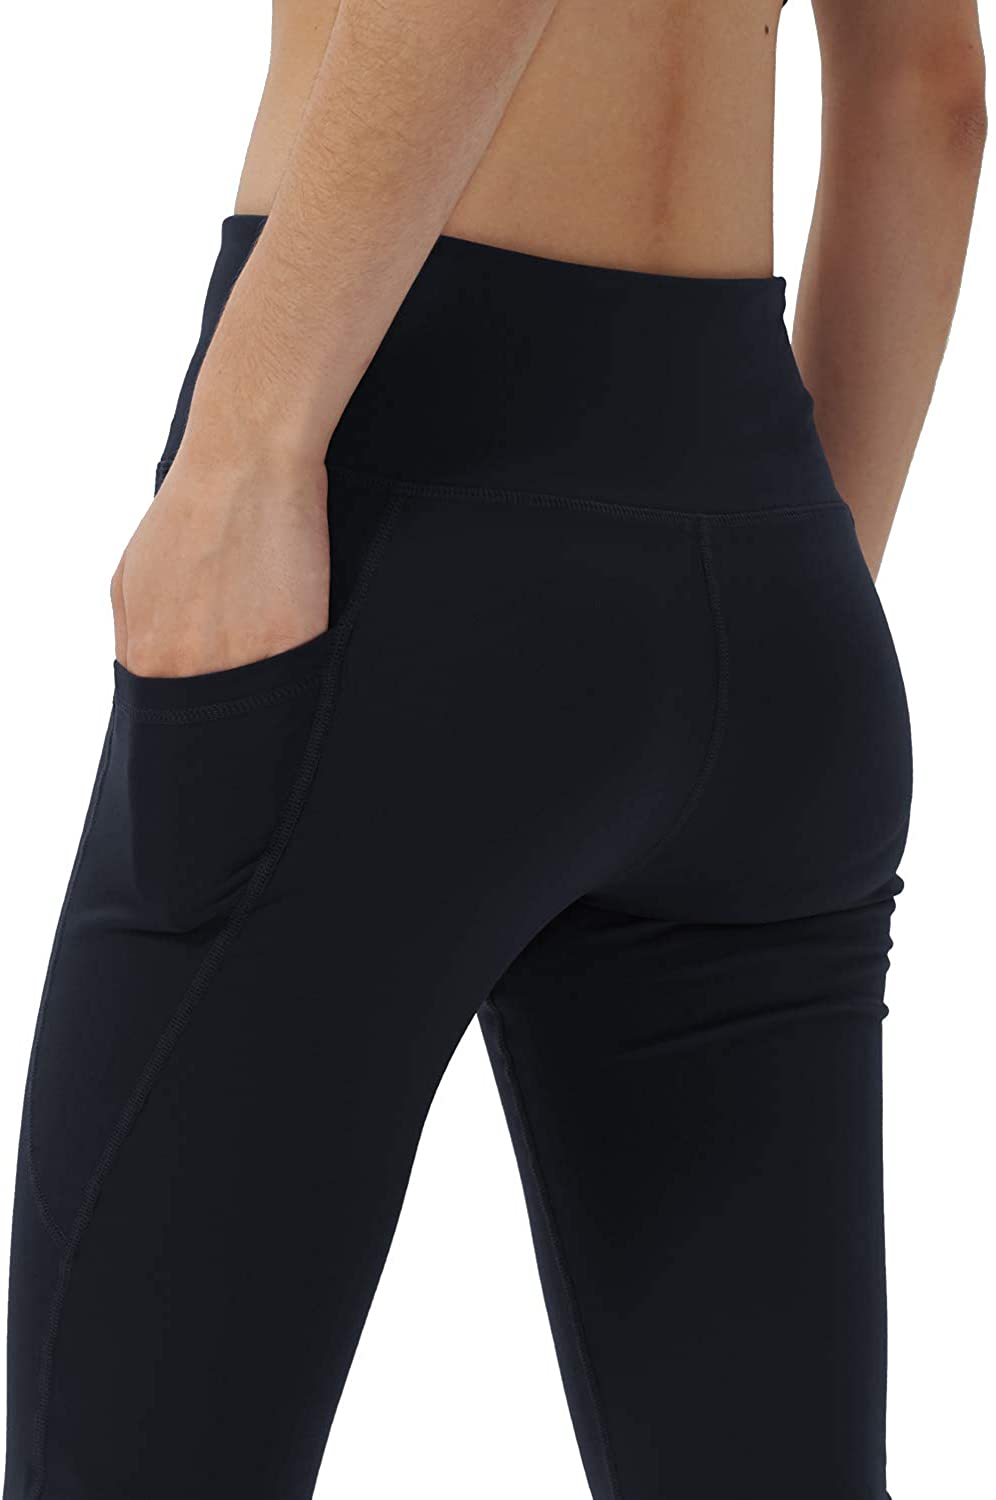  Zeronic Women's Bootcut Yoga Pants High Waist Tummy